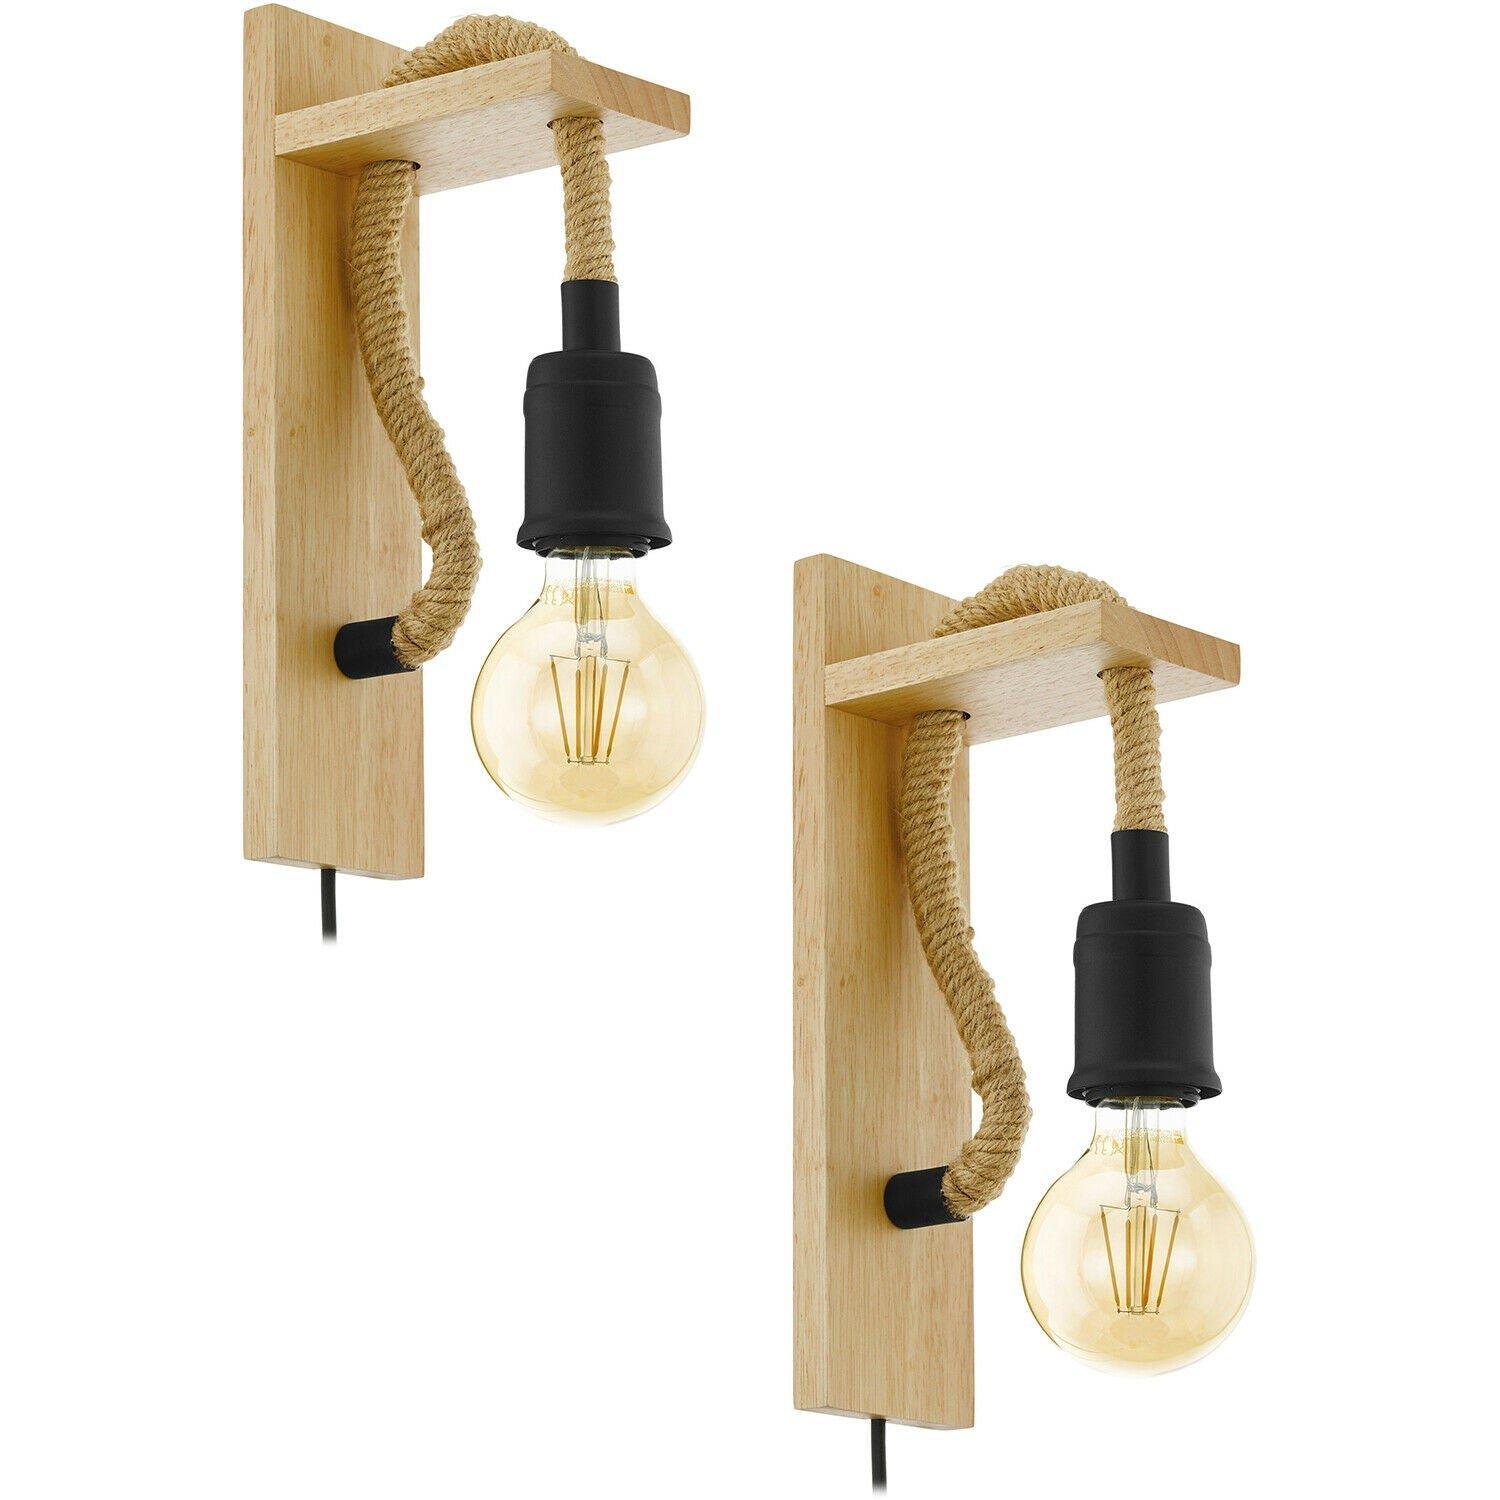 2 PACK LED Wall Light / Sconce Modern Wood & Rope Hangman Lamp 1x 10W E27